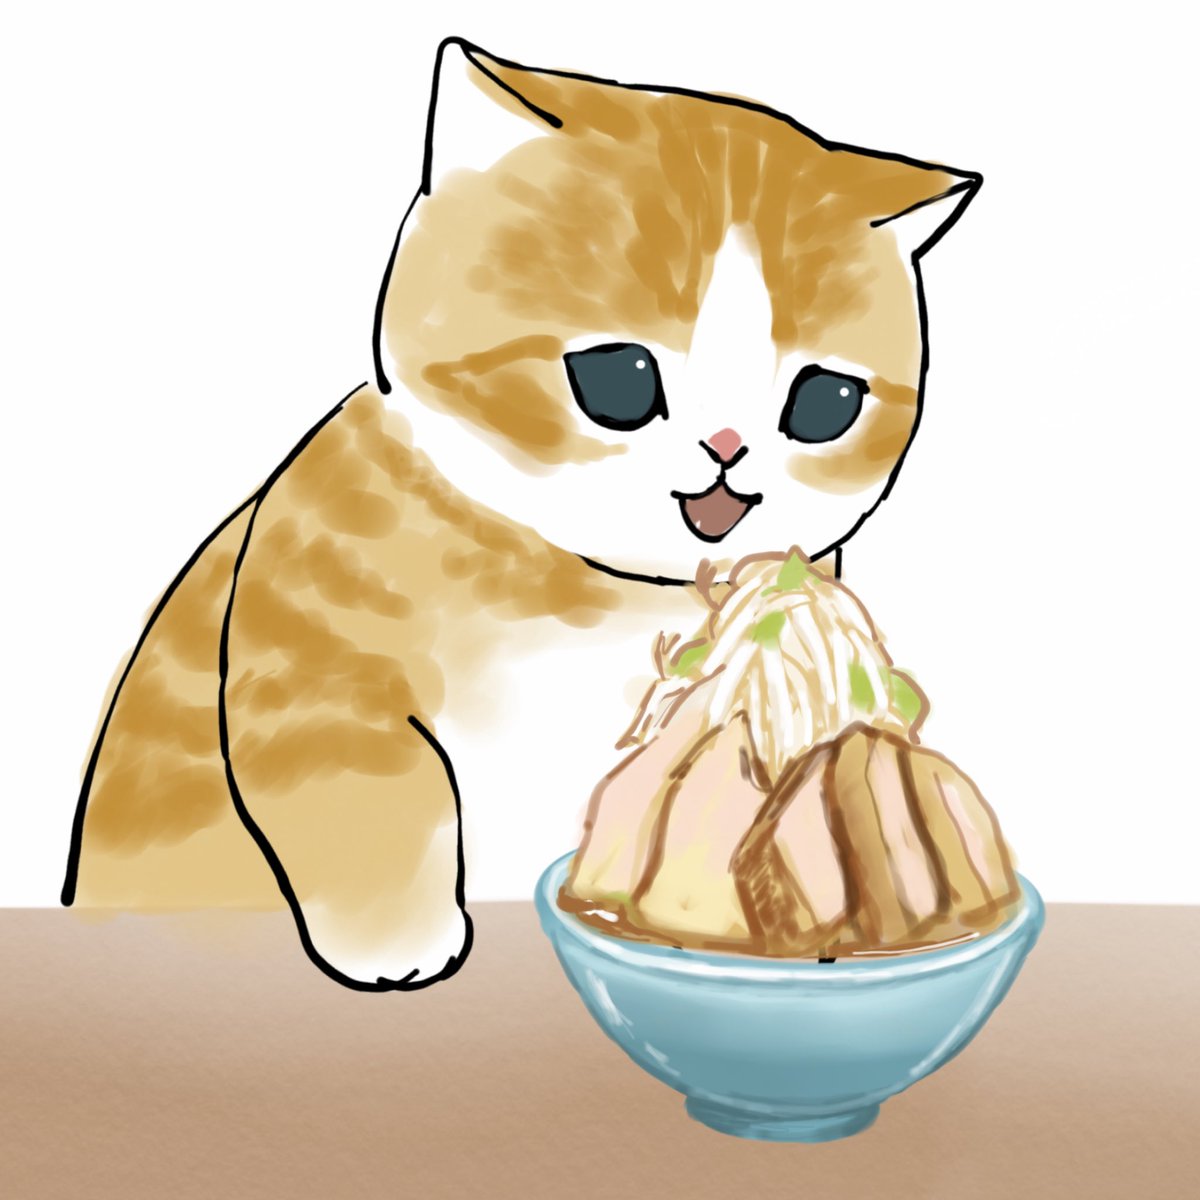 no humans food cat bowl animal focus white background simple background  illustration images